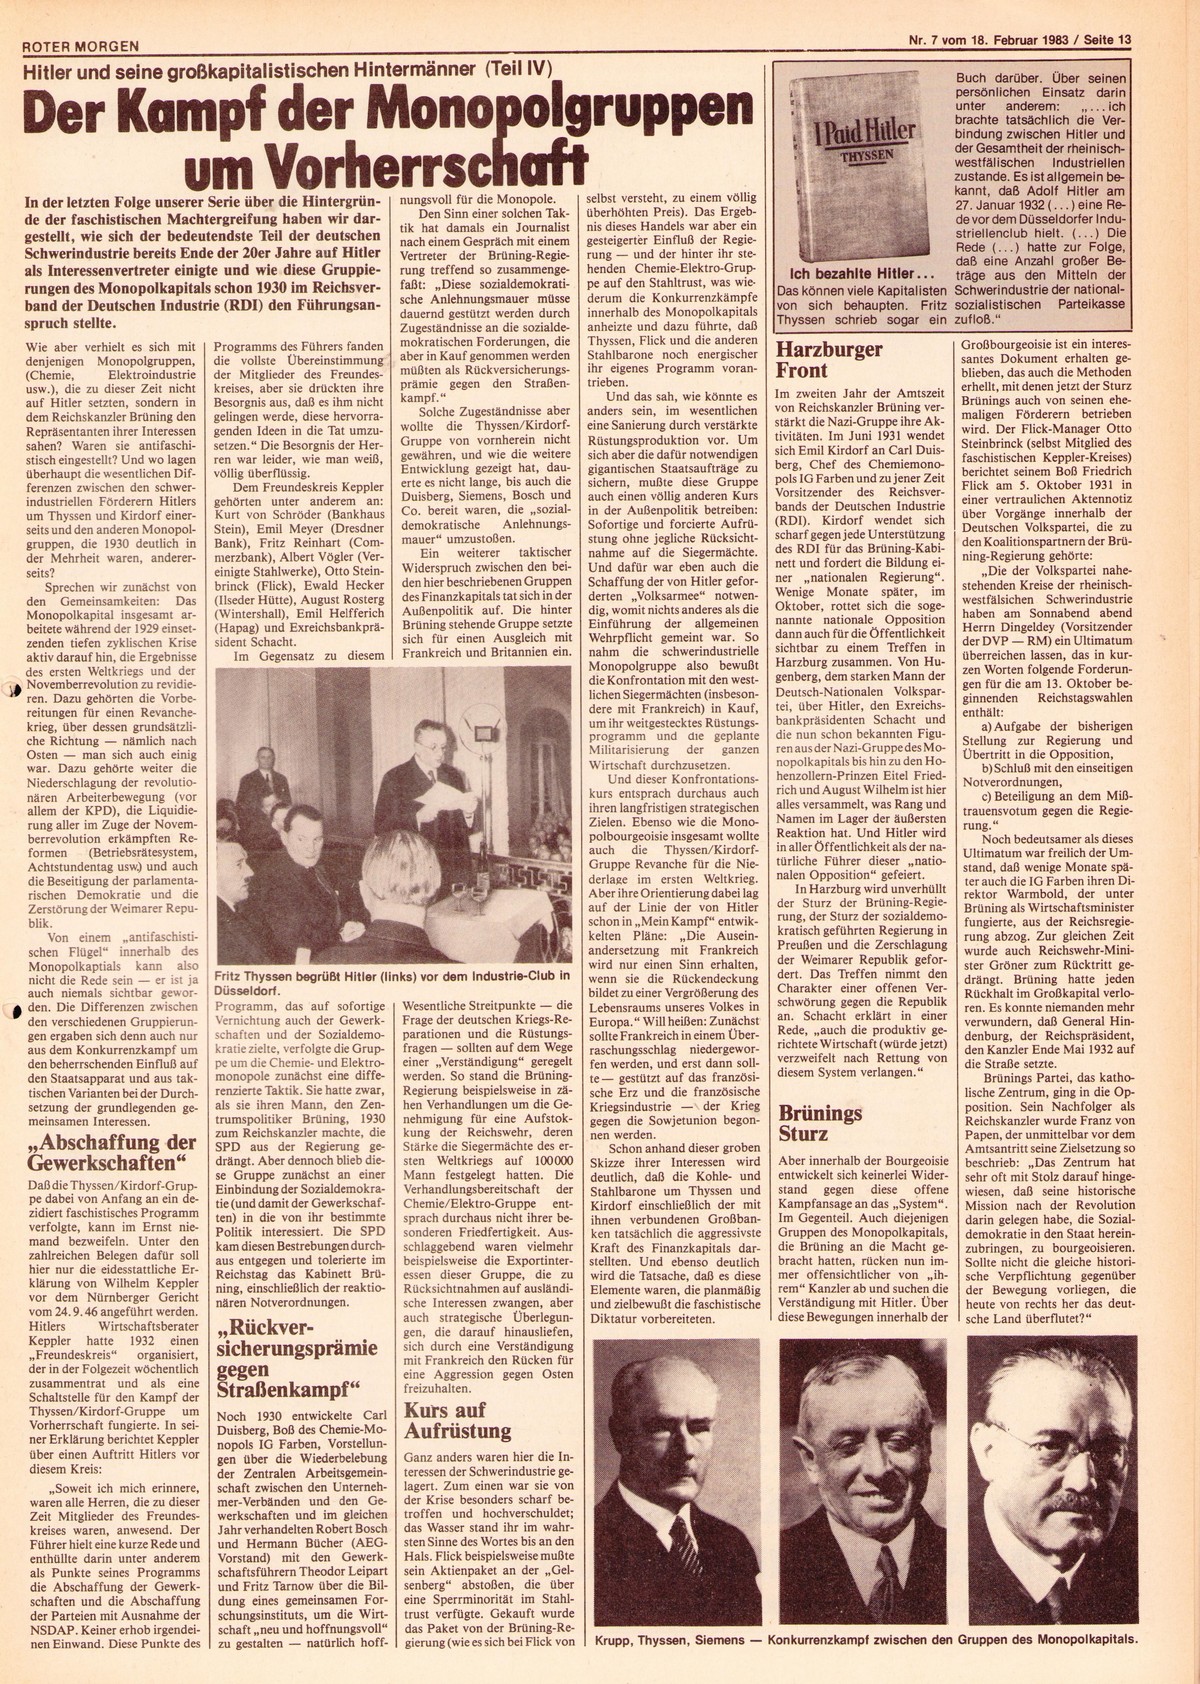 Roter Morgen, 17. Jg., 18. Februar  1983, Nr. 7, Seite 13